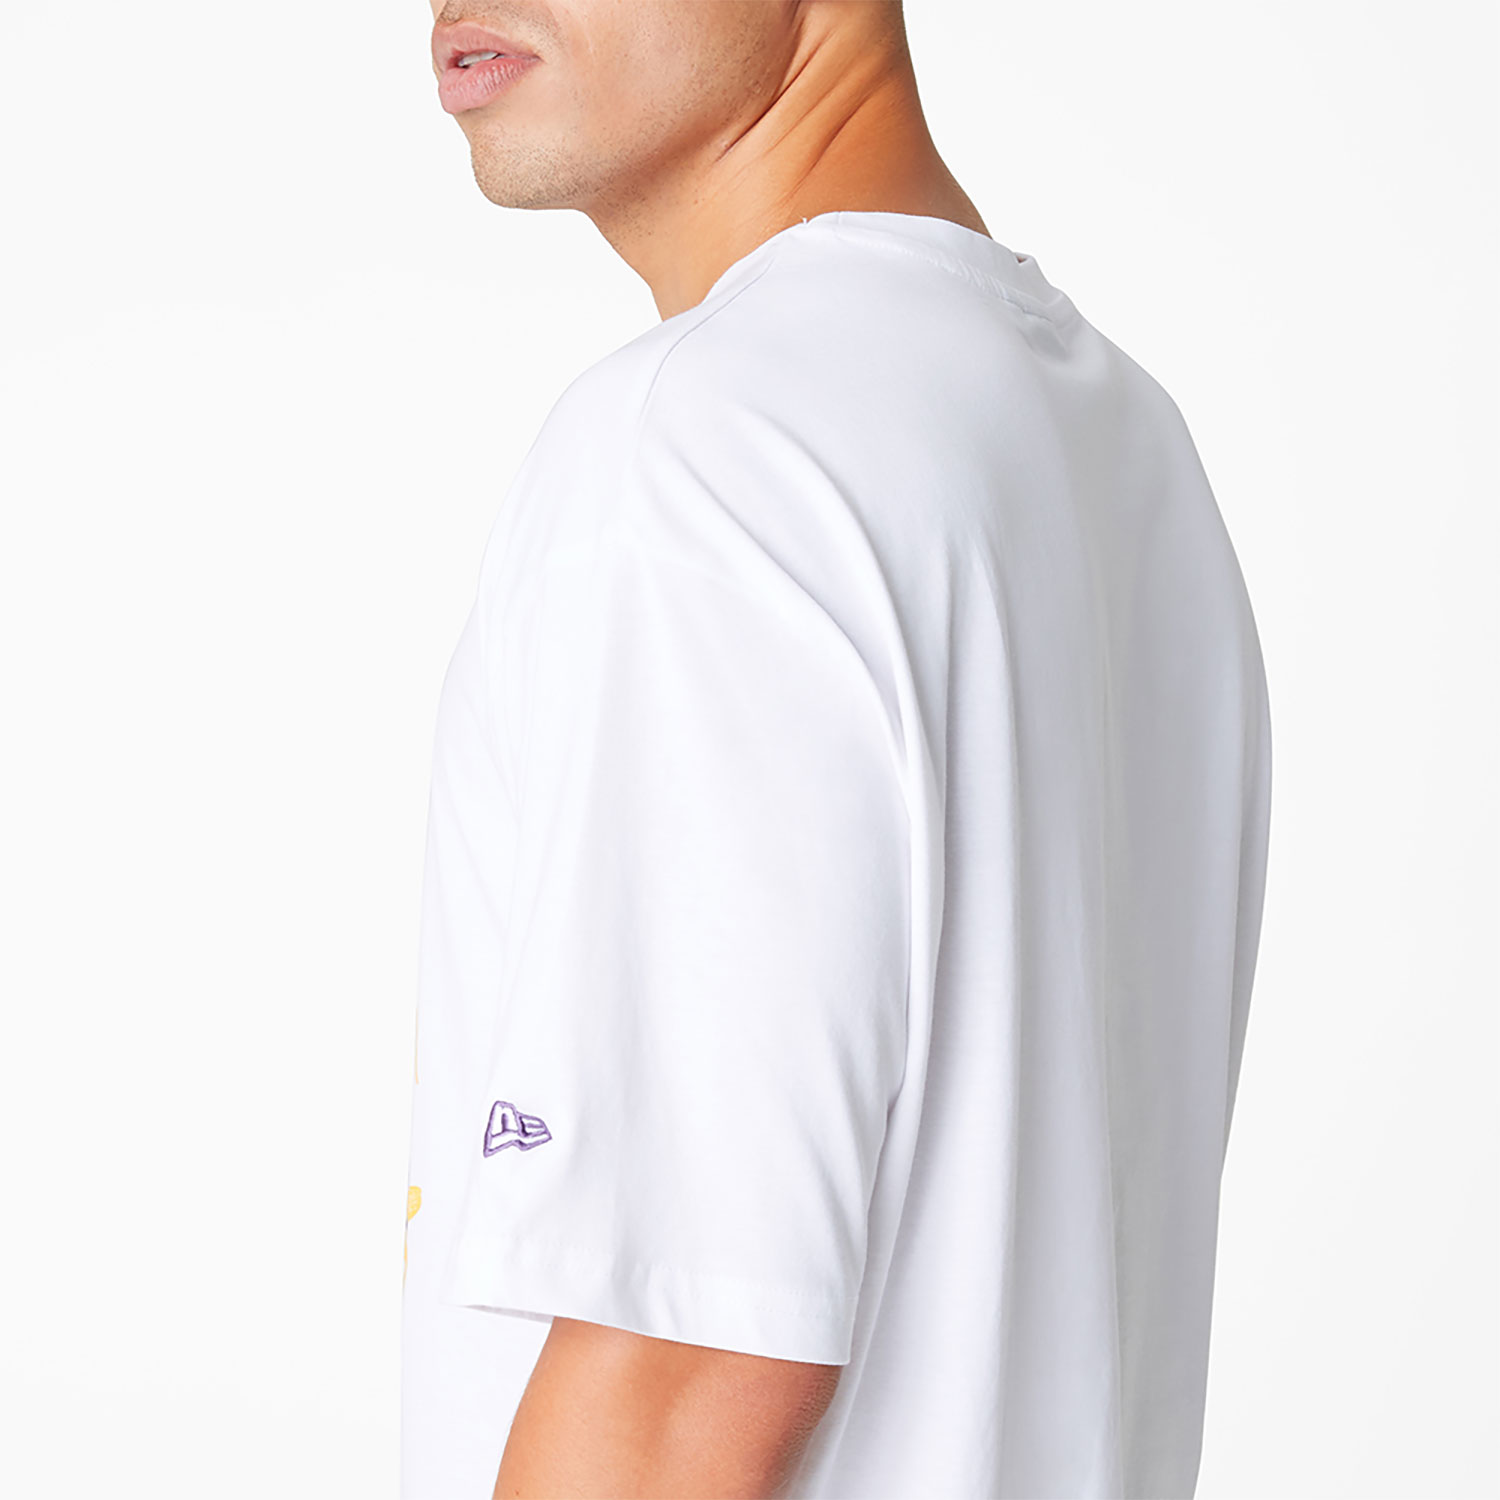 LA Lakers NBA Player Graphic White T-Shirt